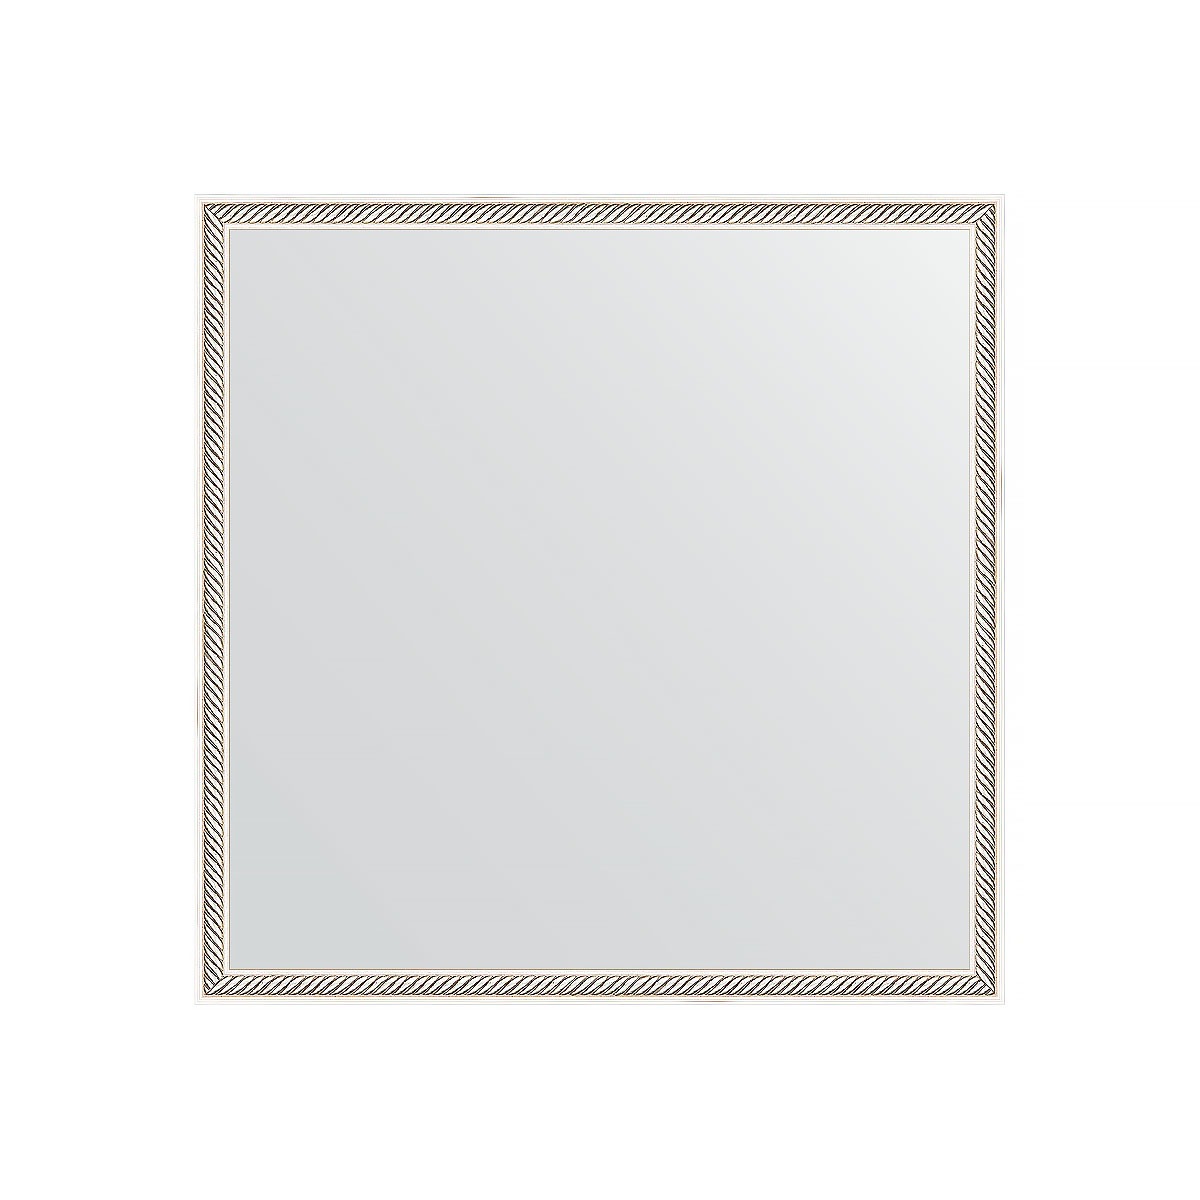 Зеркало в багетной раме Evoform витое серебро 28 мм 68х68 см